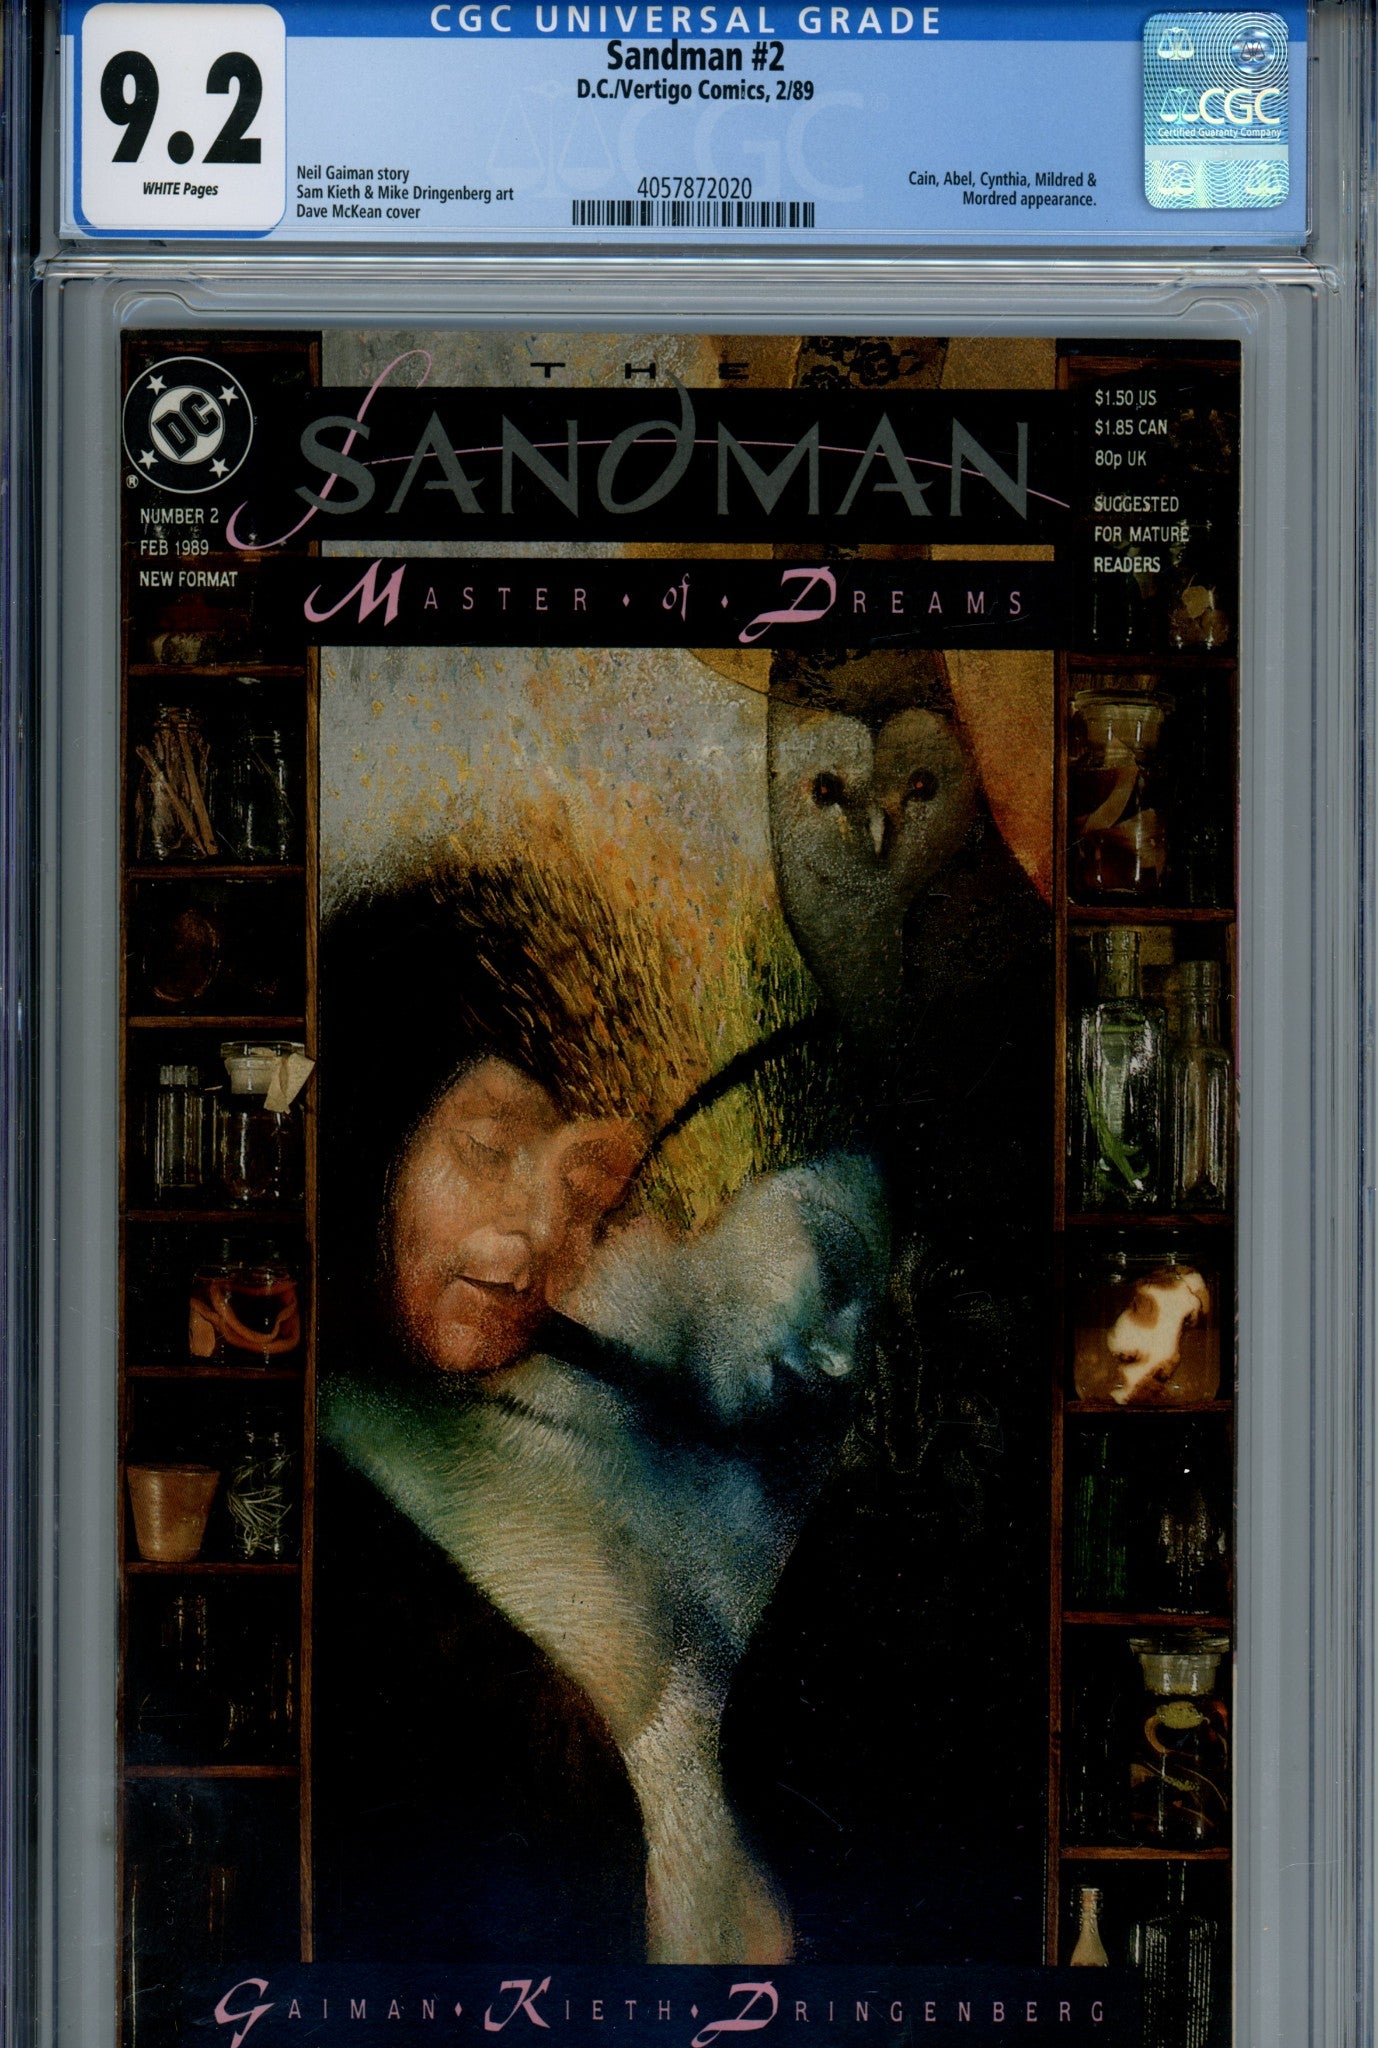 Sandman Vol 2 2 CGC 9.2 (1989)